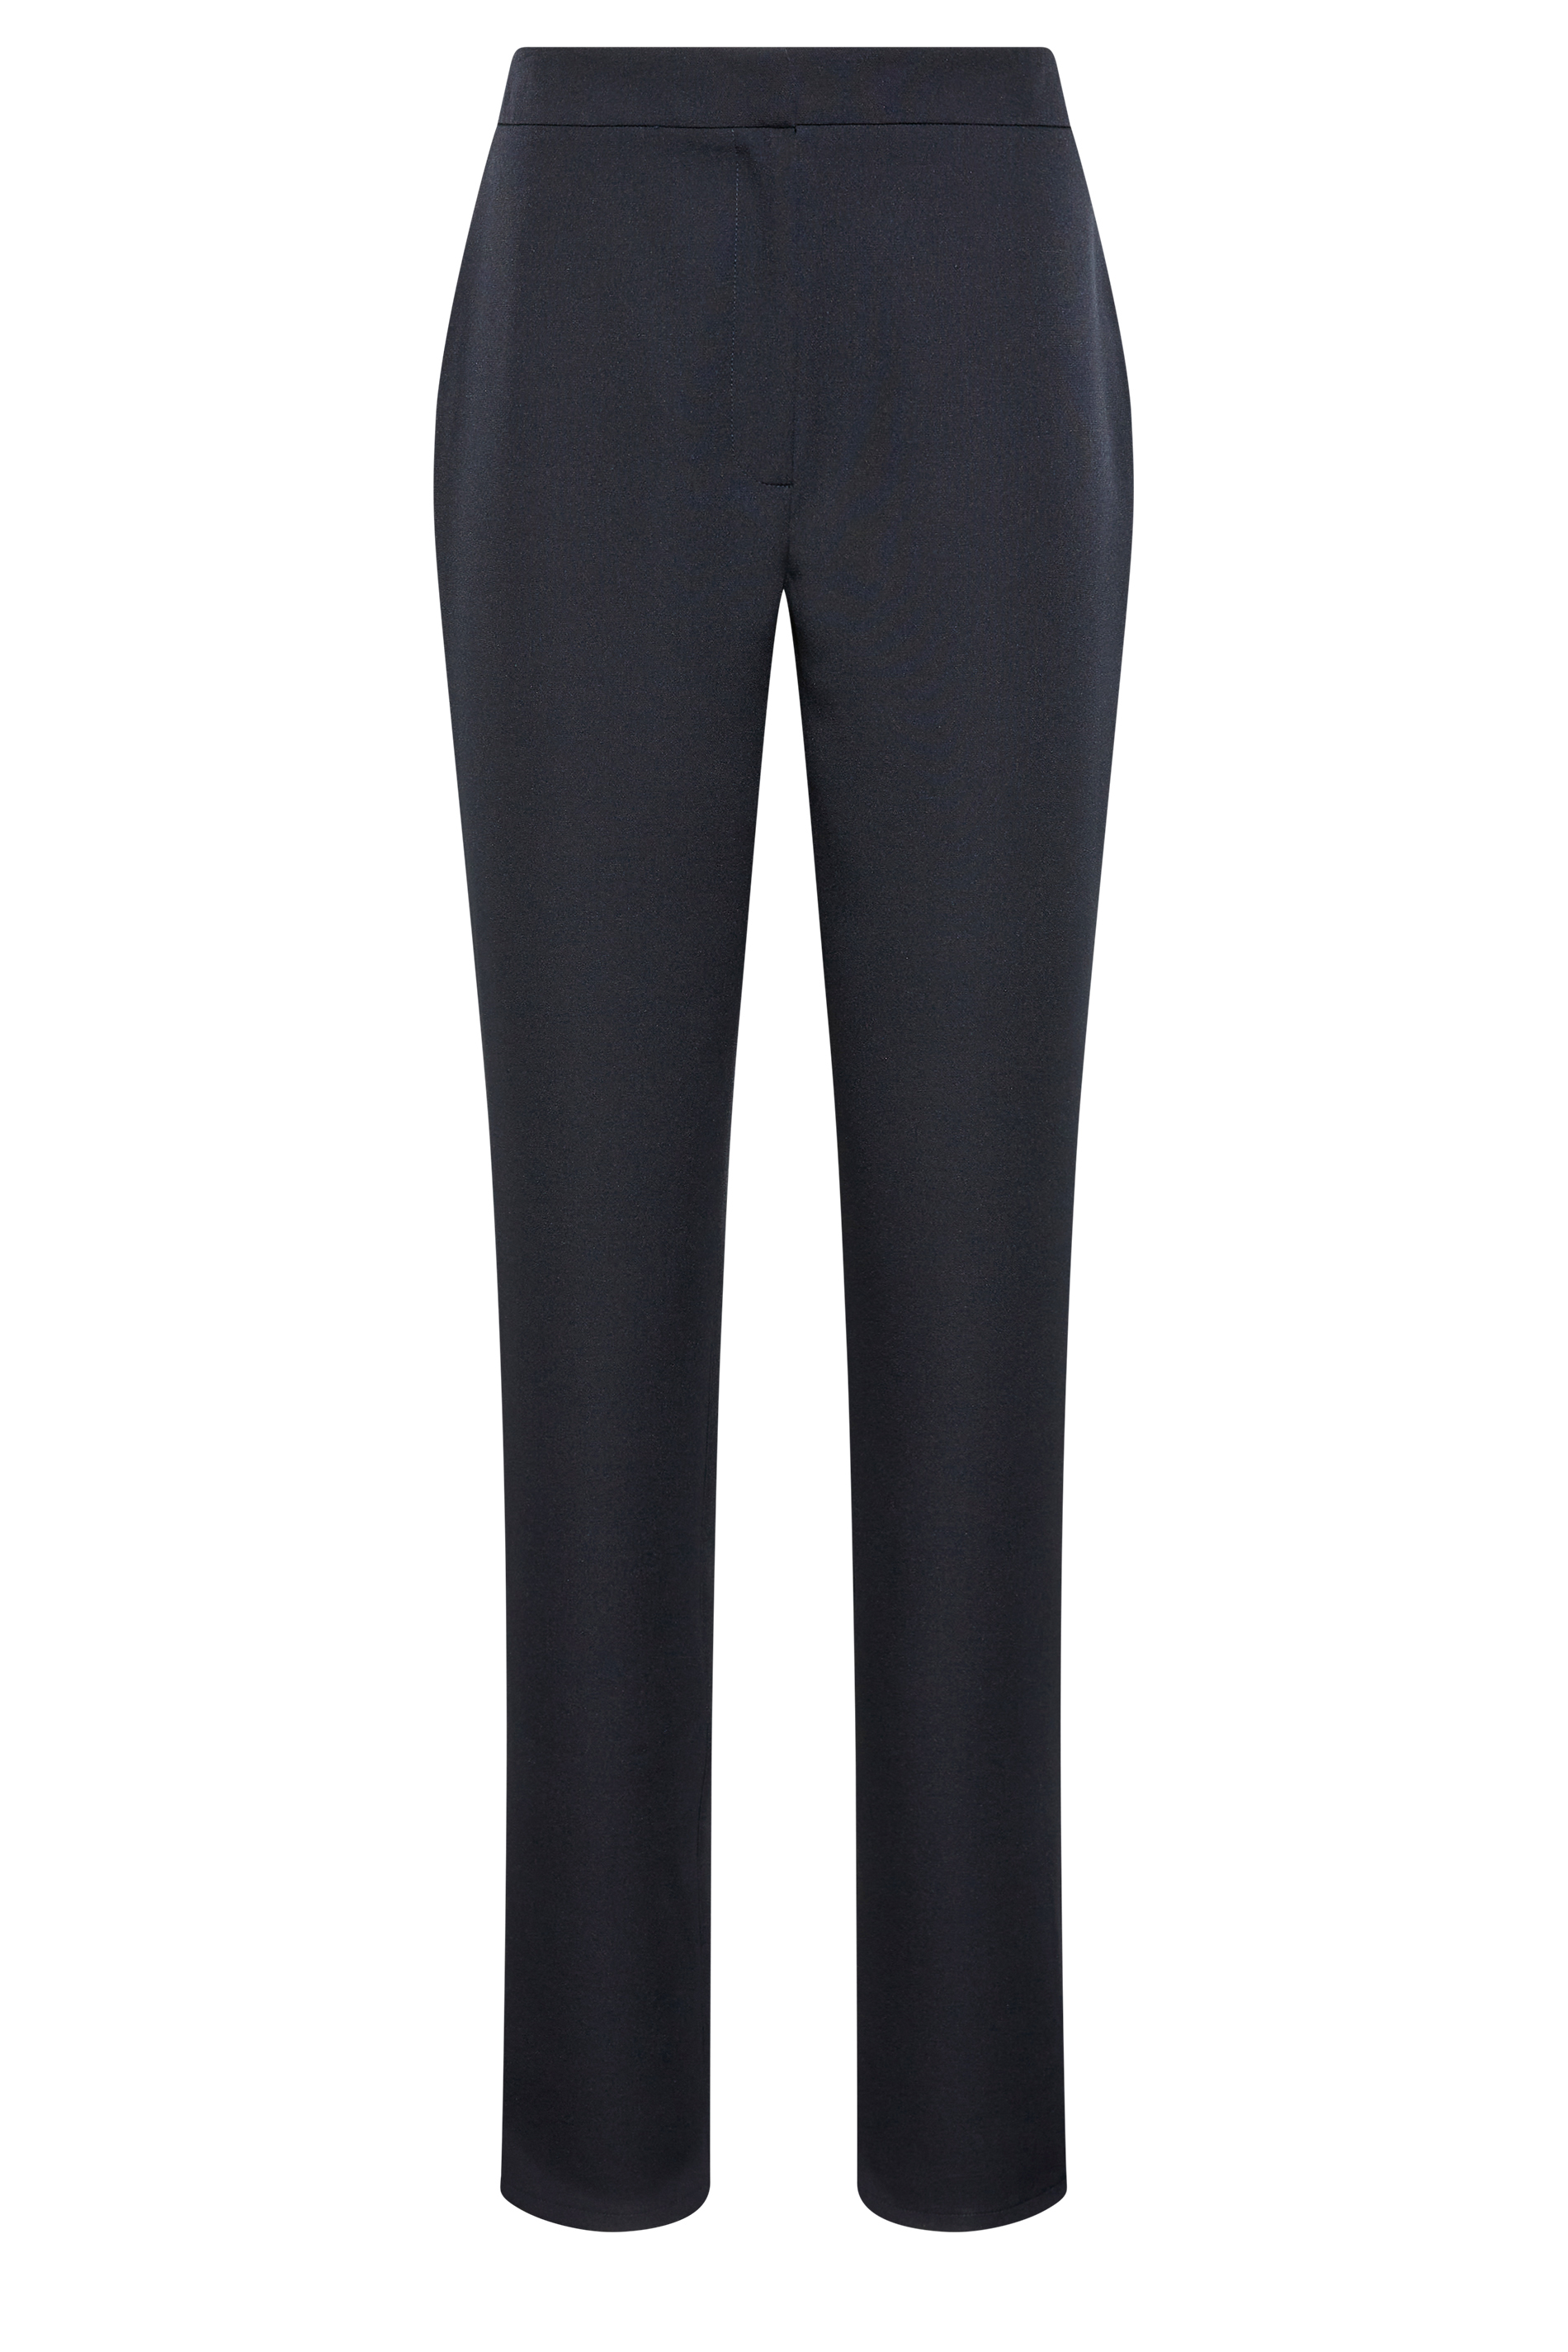 LTS Tall Women's Navy Blue Scuba Crepe Slim Leg Trousers | Long Tall Sally 2